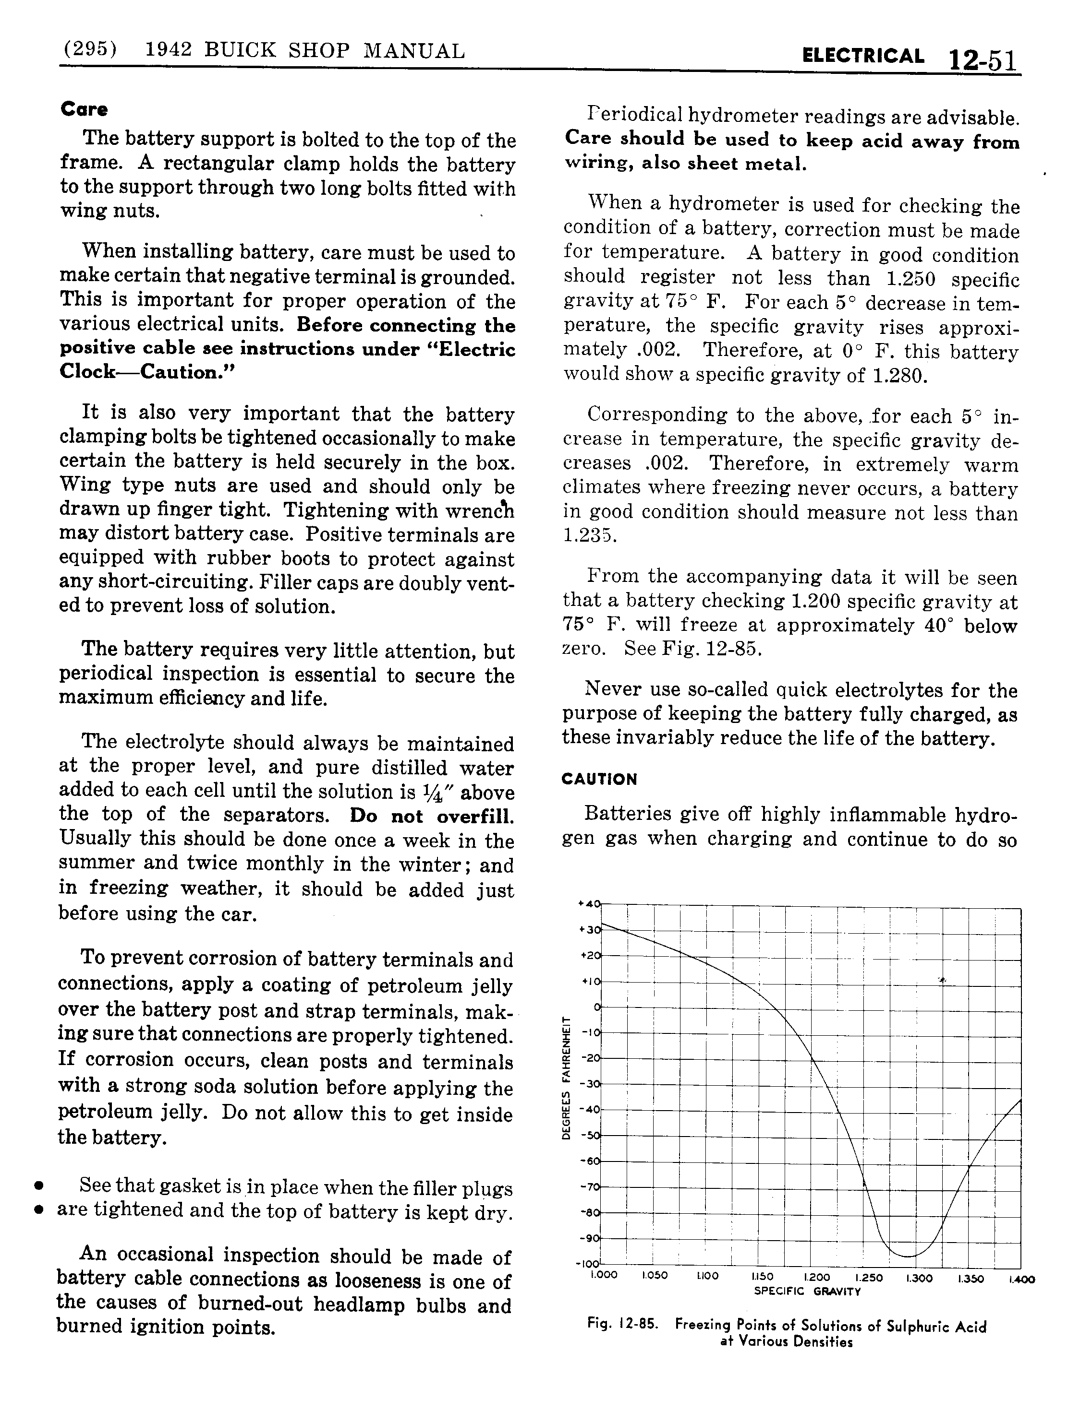 n_13 1942 Buick Shop Manual - Electrical System-051-051.jpg